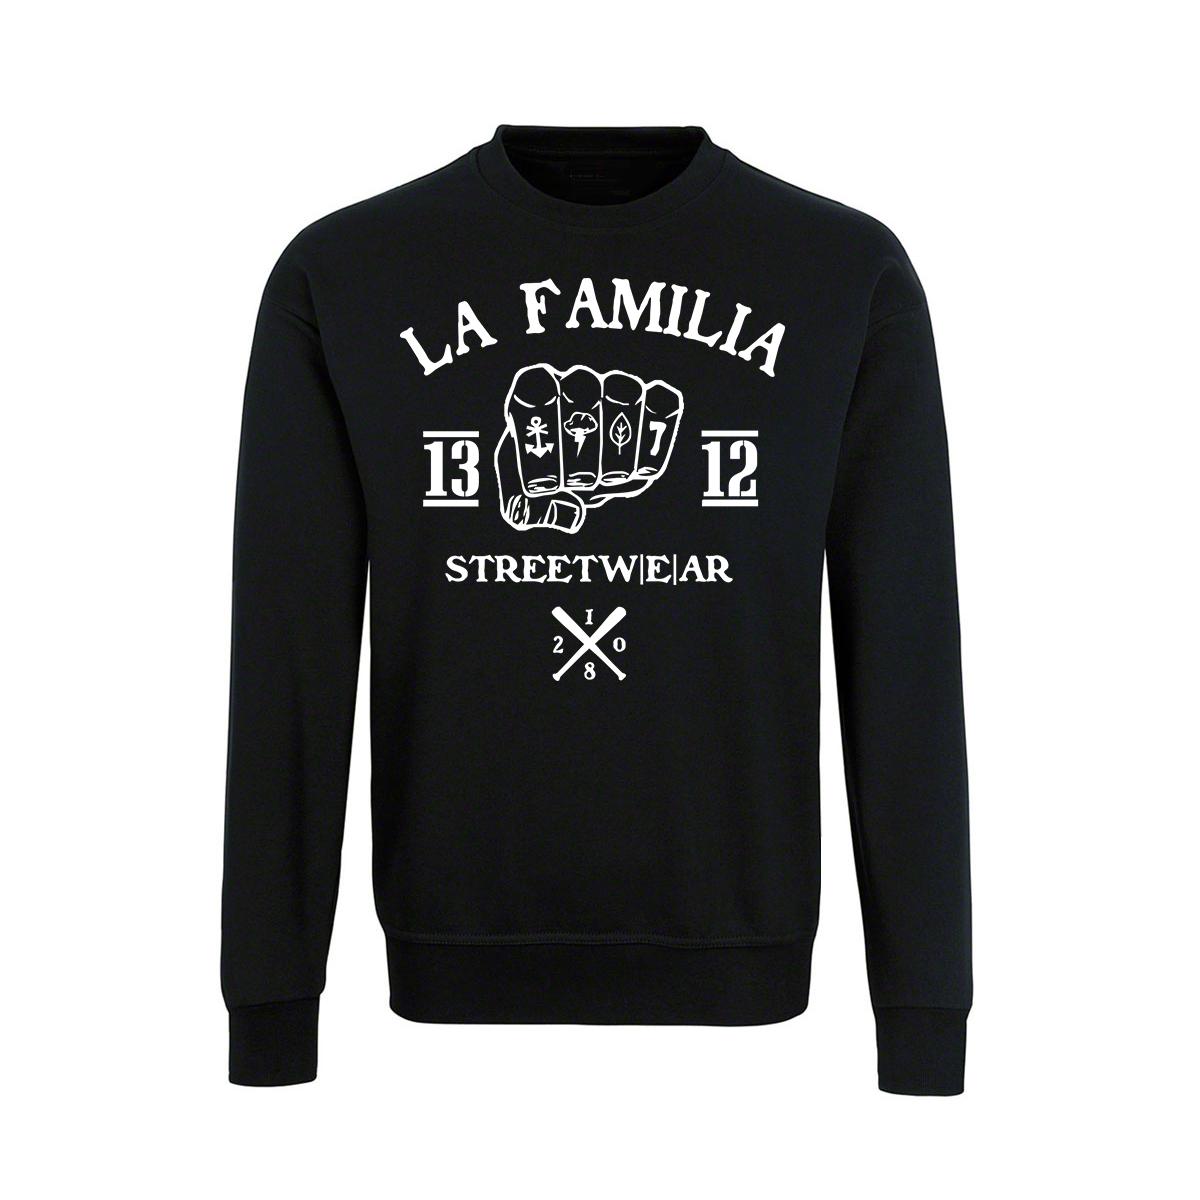 La Familia - Männer Pullover - 1312 Streetw|e|ar - schwarz